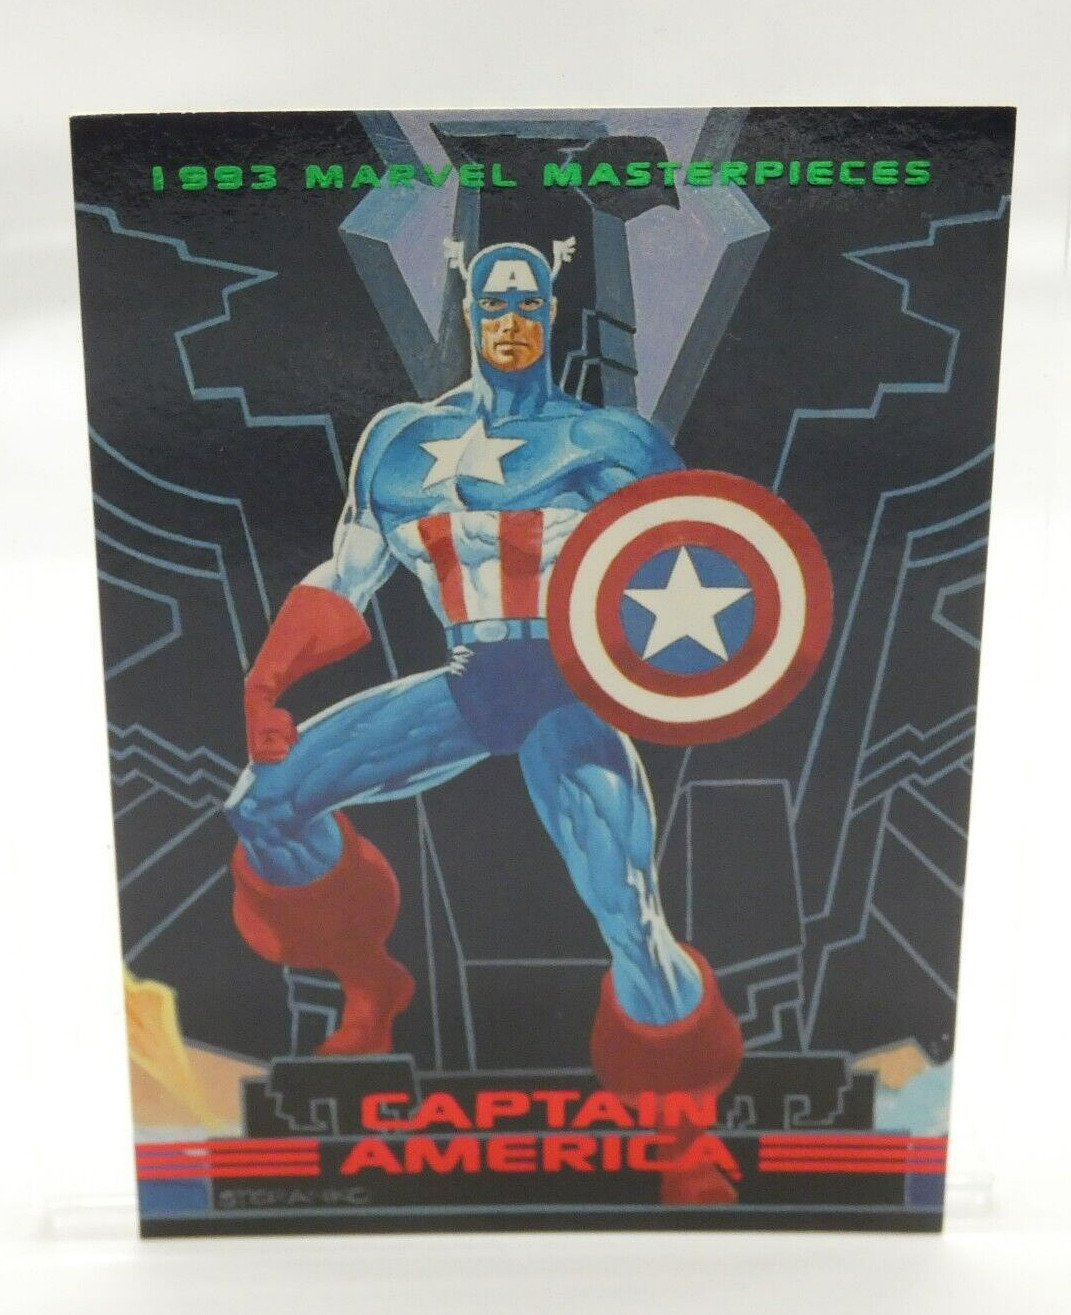 1993 Marvel Masterpieces CAPTAIN AMERICA Sky Box #15 Trading Card Super Hero